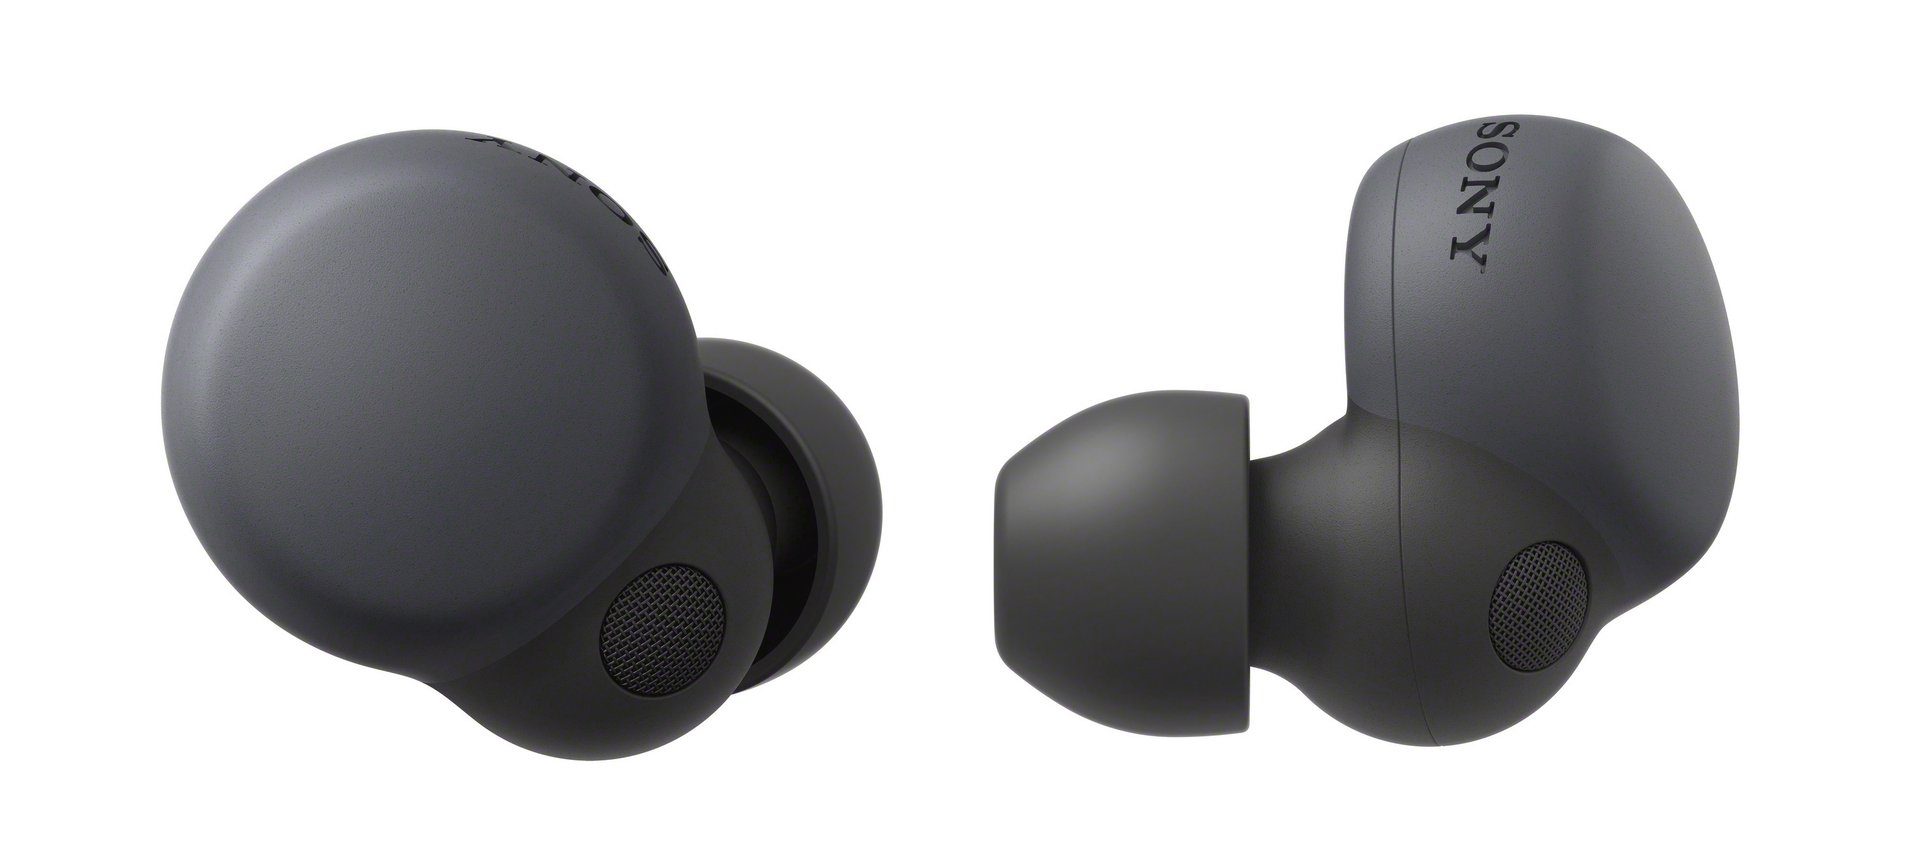 Wireless, NFC, (Noise-Cancelling, S Akkulaufzeit) Sony Touch-Steuerung, In-Ear-Kopfhörer 20 wireless schwarz Noise LinkBuds Bluetooth, st. True Cancelling,